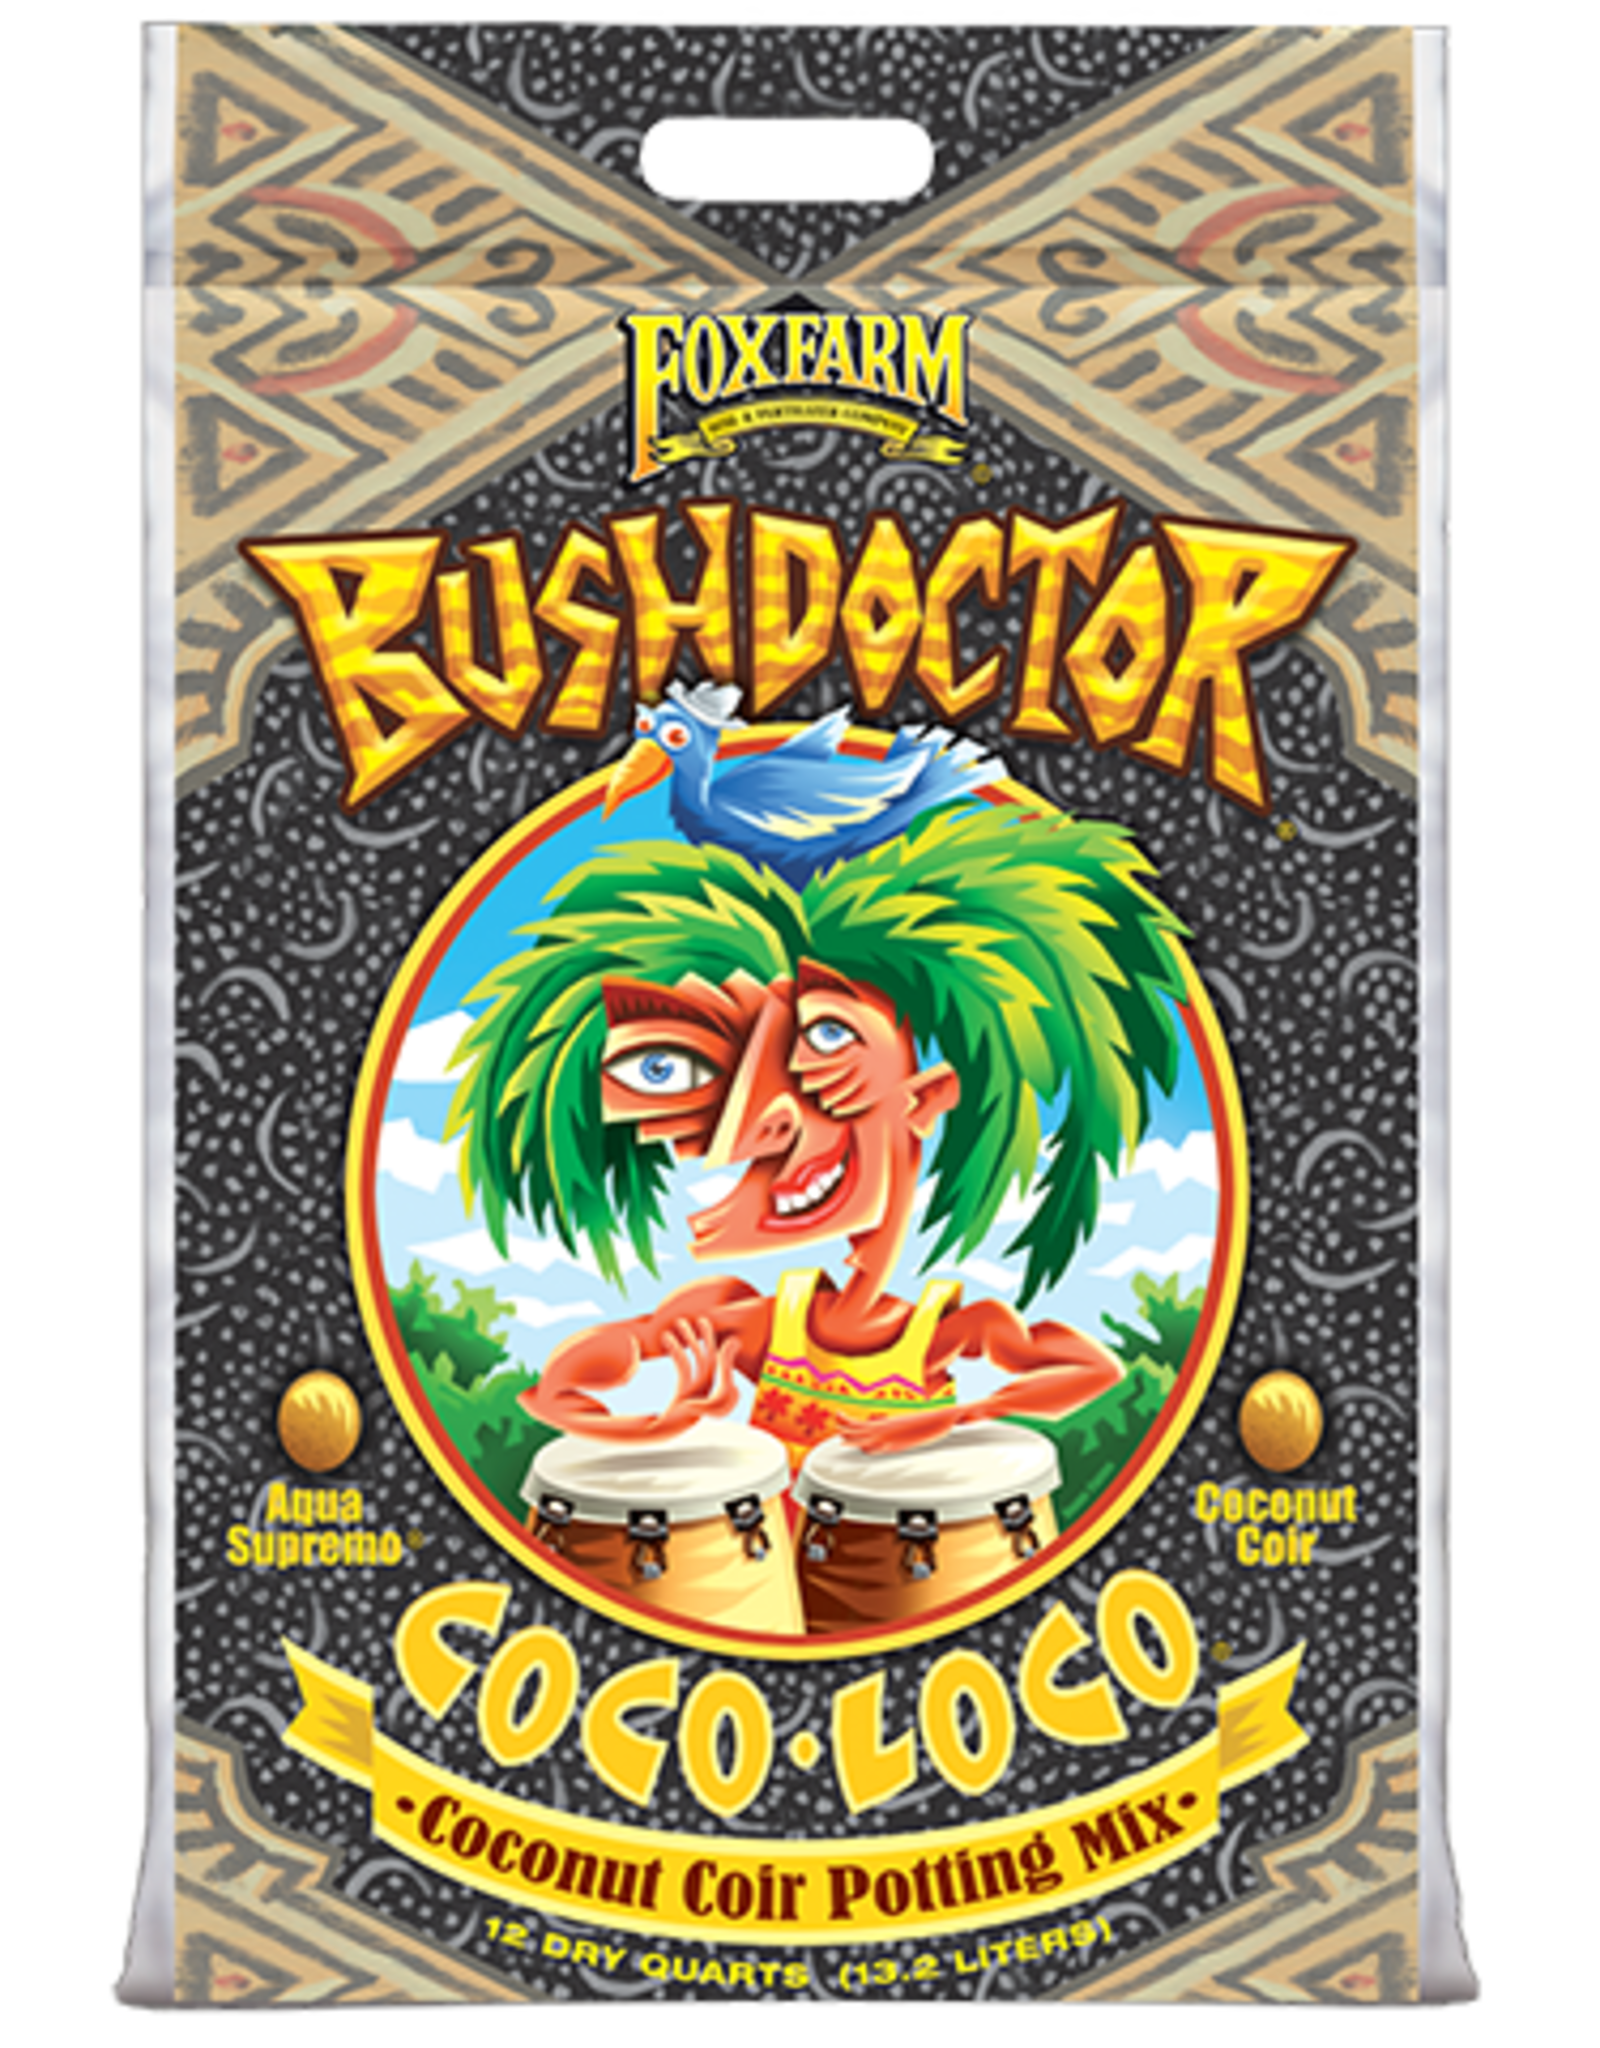 Foxfarm FoxFarm Bush Doctor Coco Loco Potting Mix 2.0 cu ft